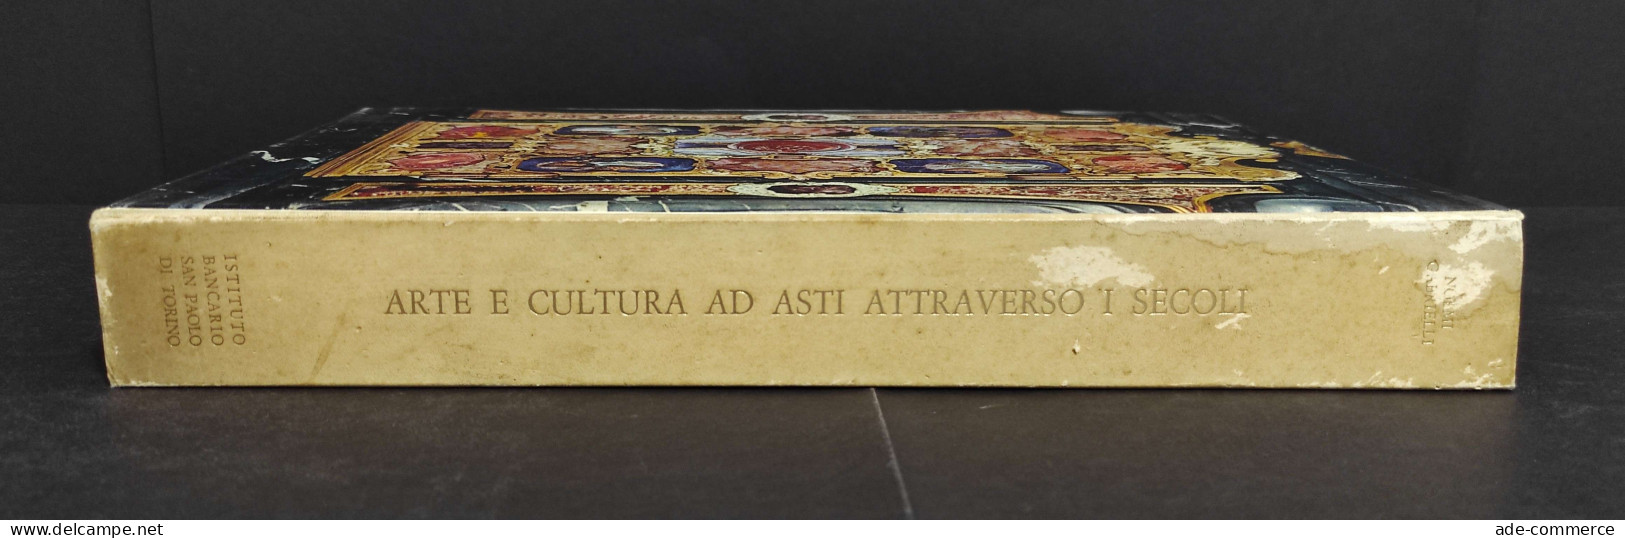 Arte Cultura Ad Asti Attraverso I Secoli - N. Gabrielli - 1977 - Arte, Antigüedades